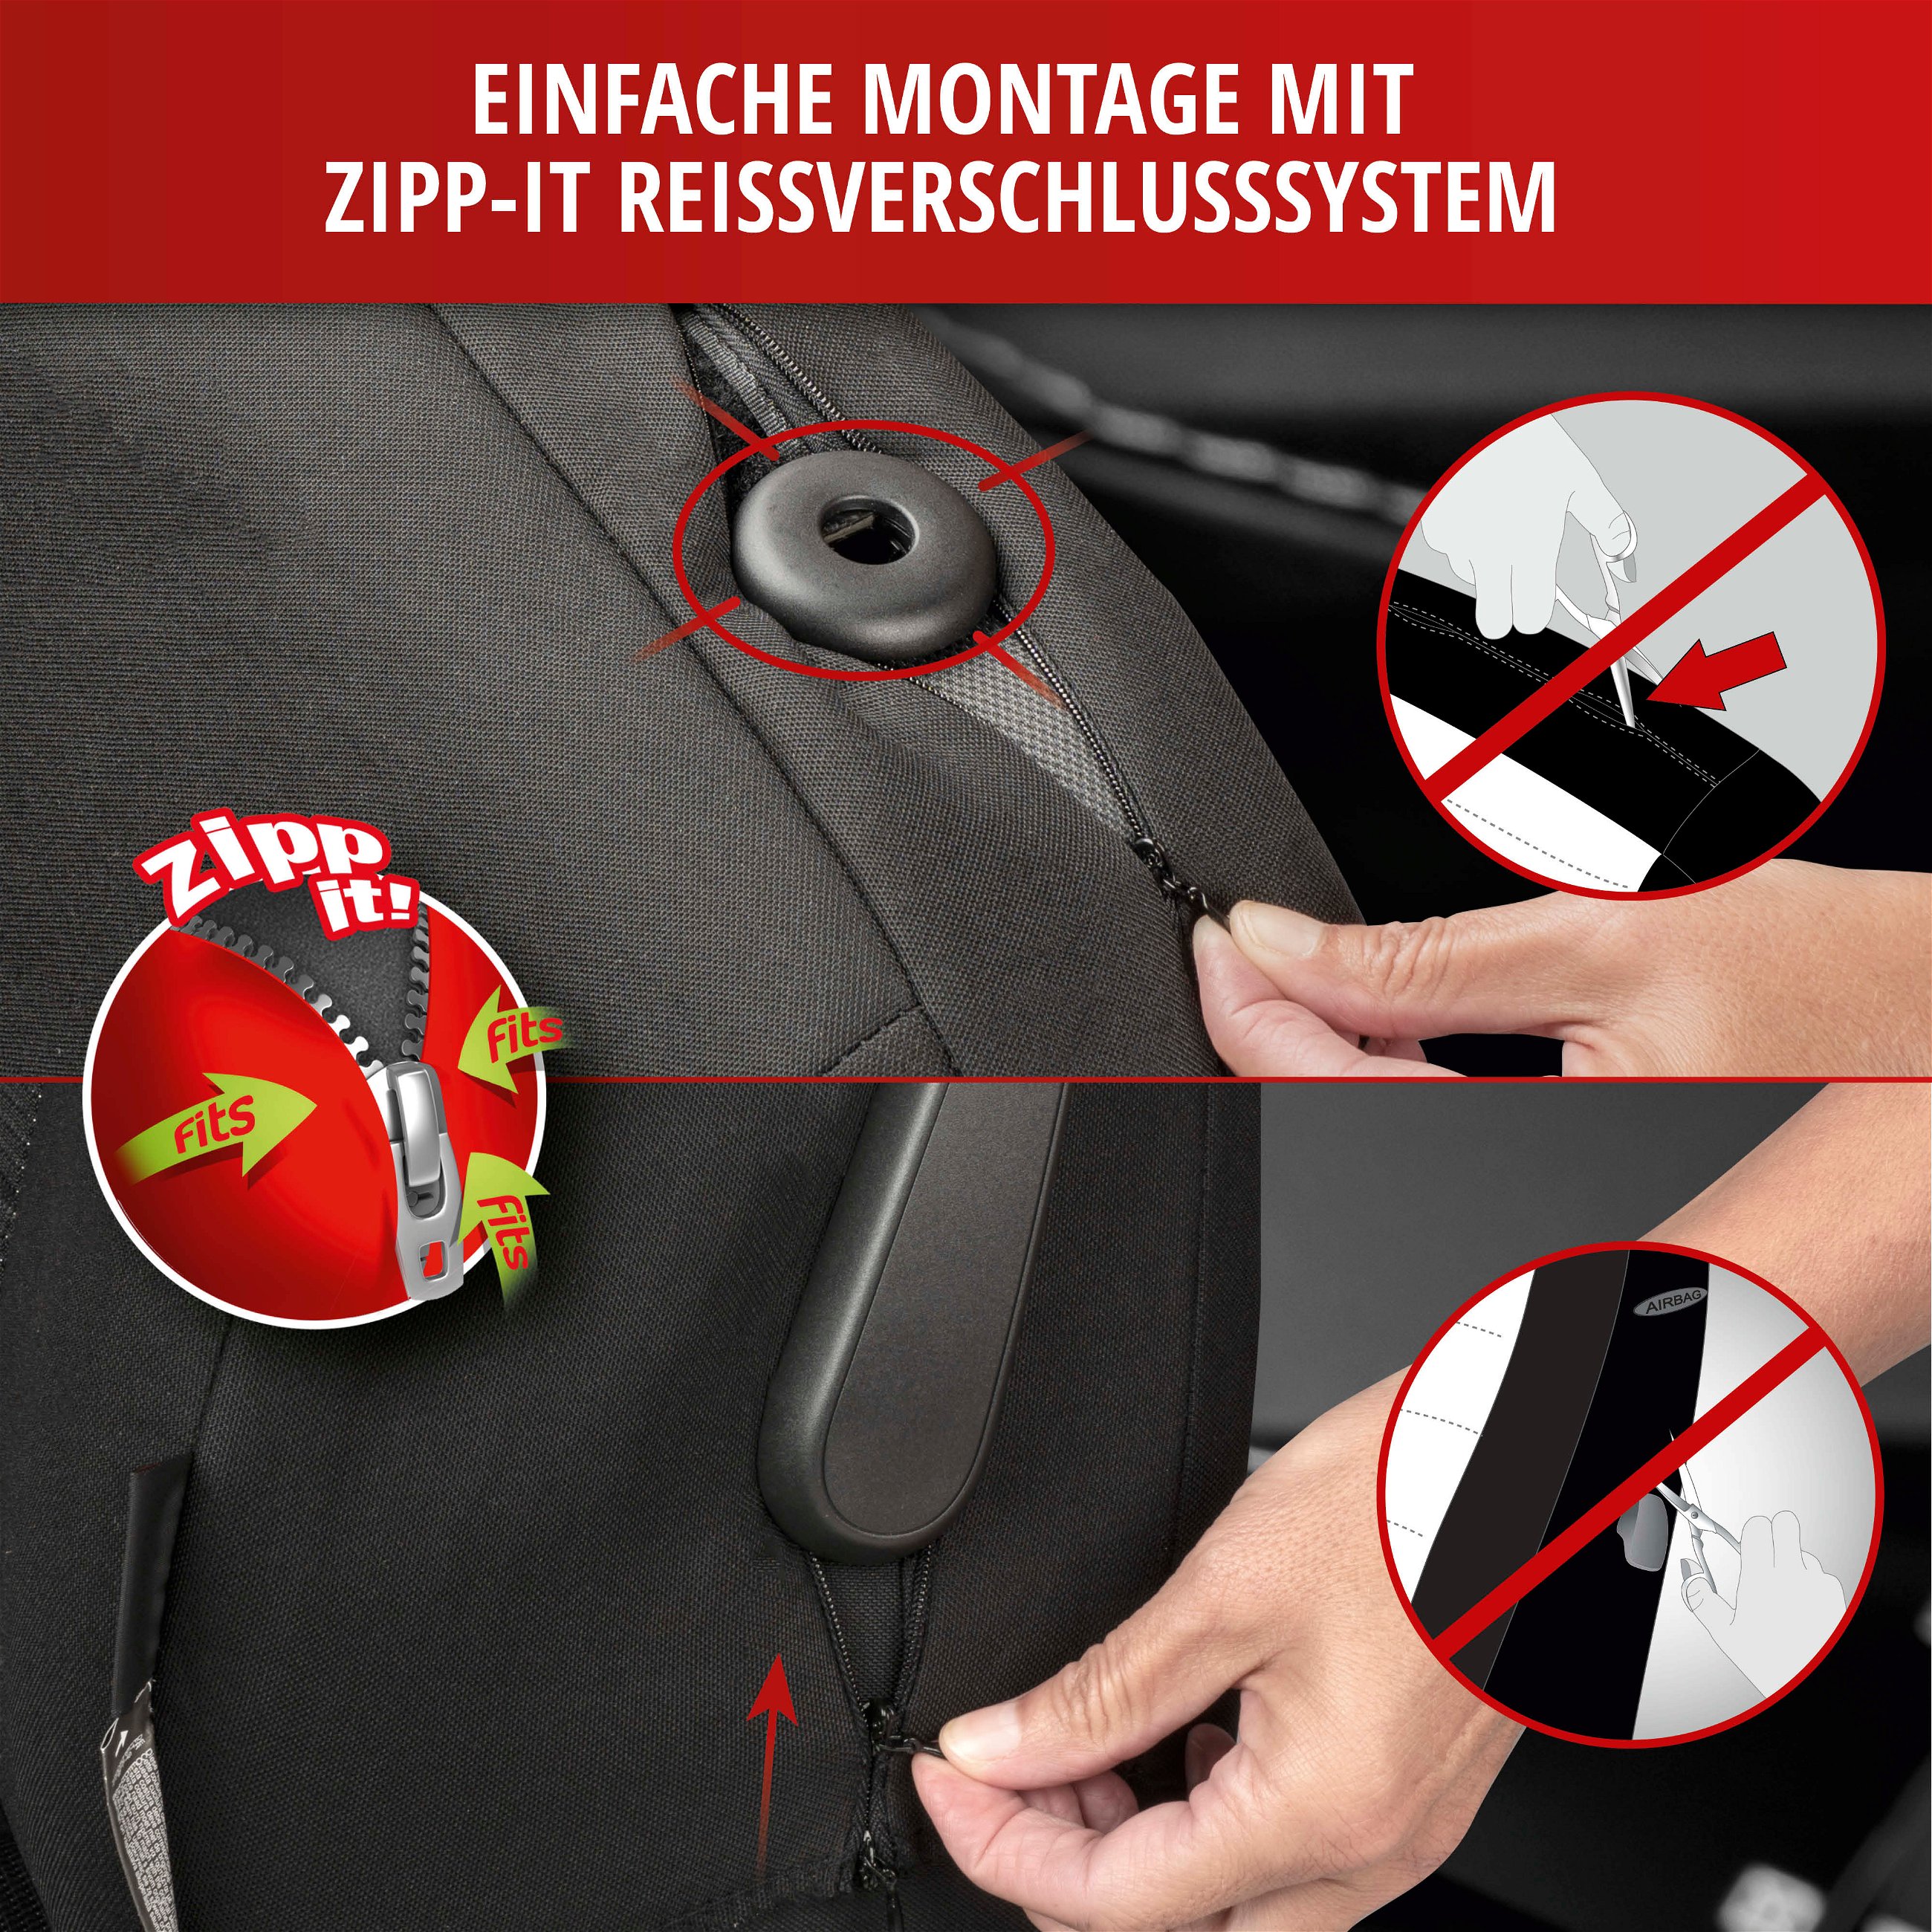 ZIPP IT Premium Inde Autositzbezüge mit Reissverschluss System